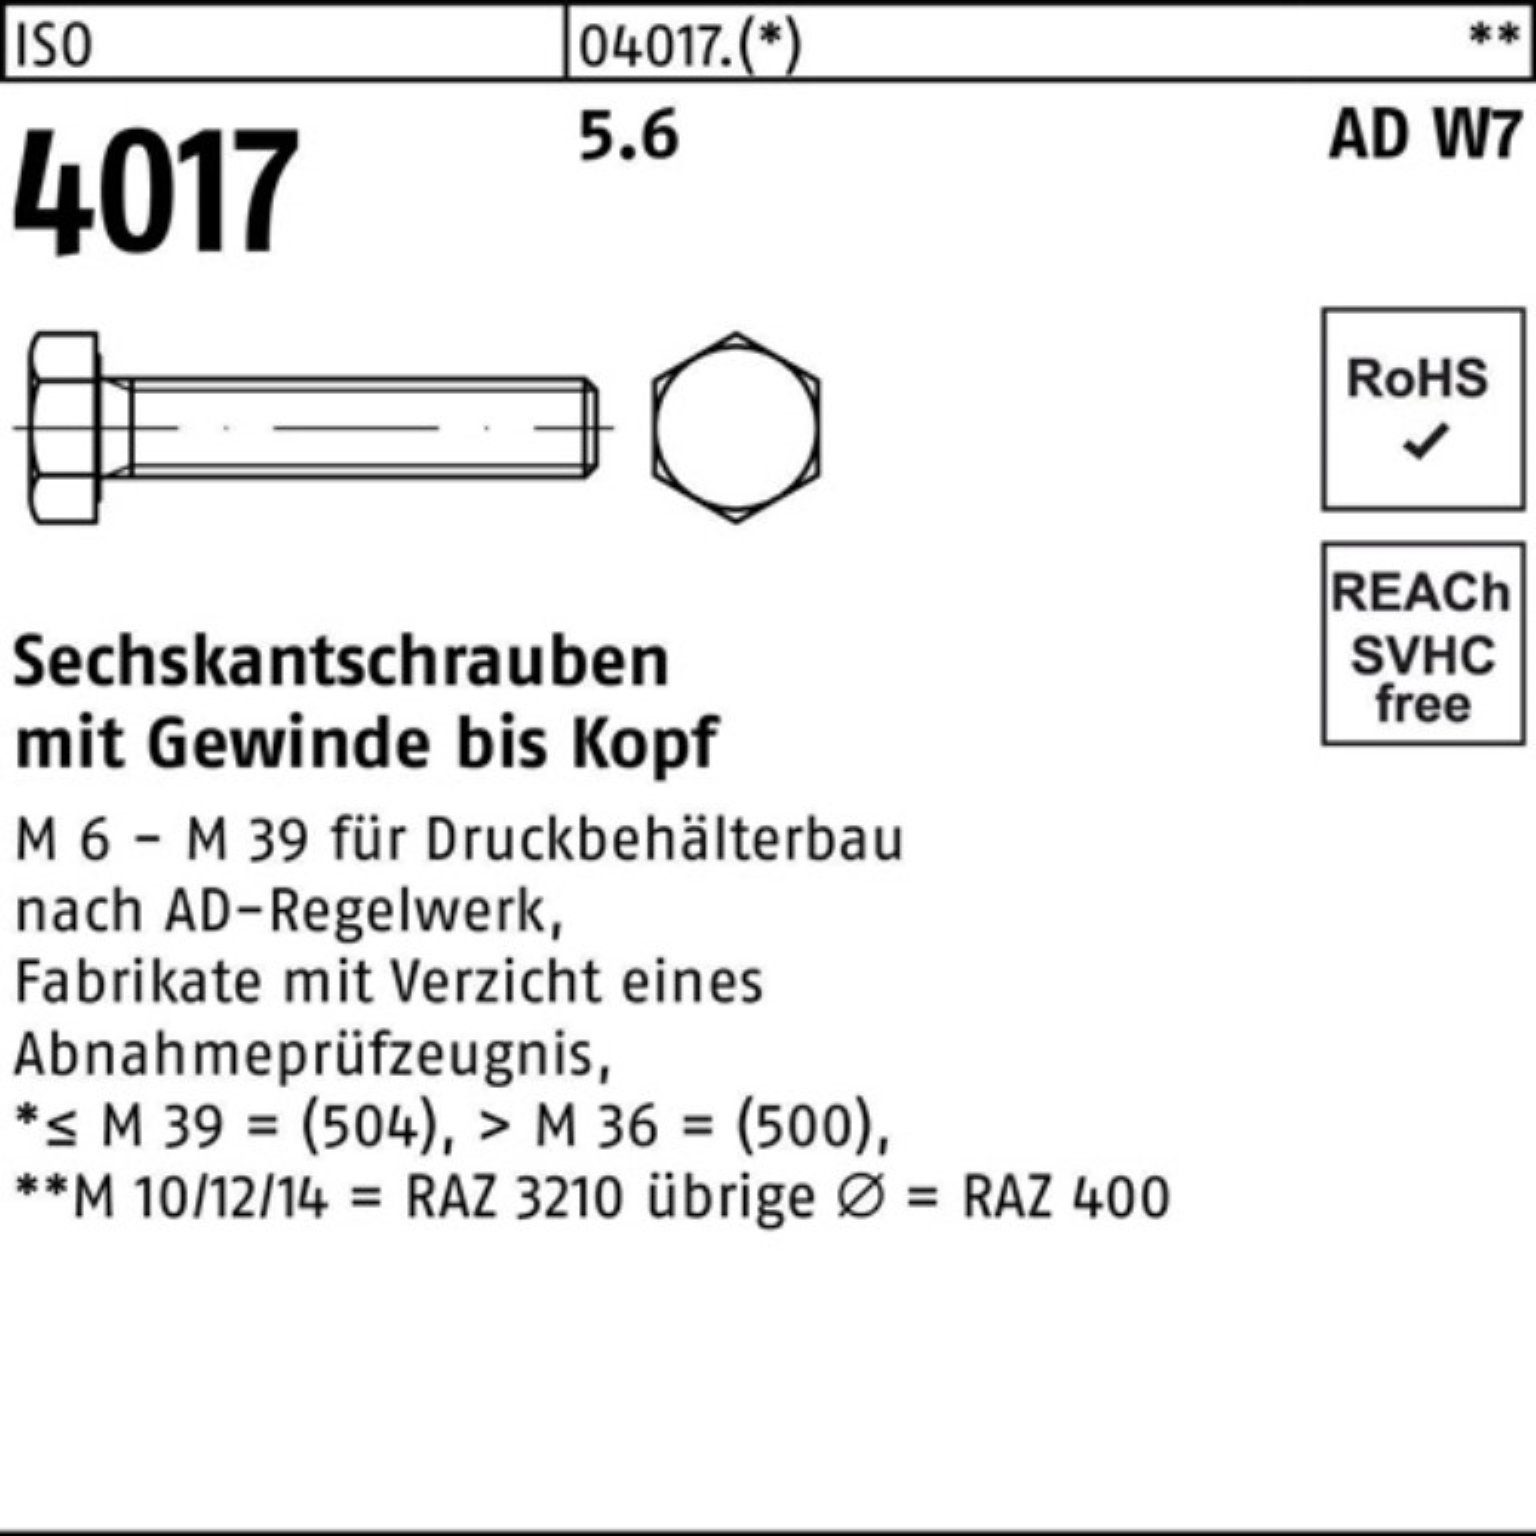 Bufab Sechskantschraube 100er Pack Sechskantschraube ISO 4017 VG M10x 70 5.6 AD W7 100 Stück